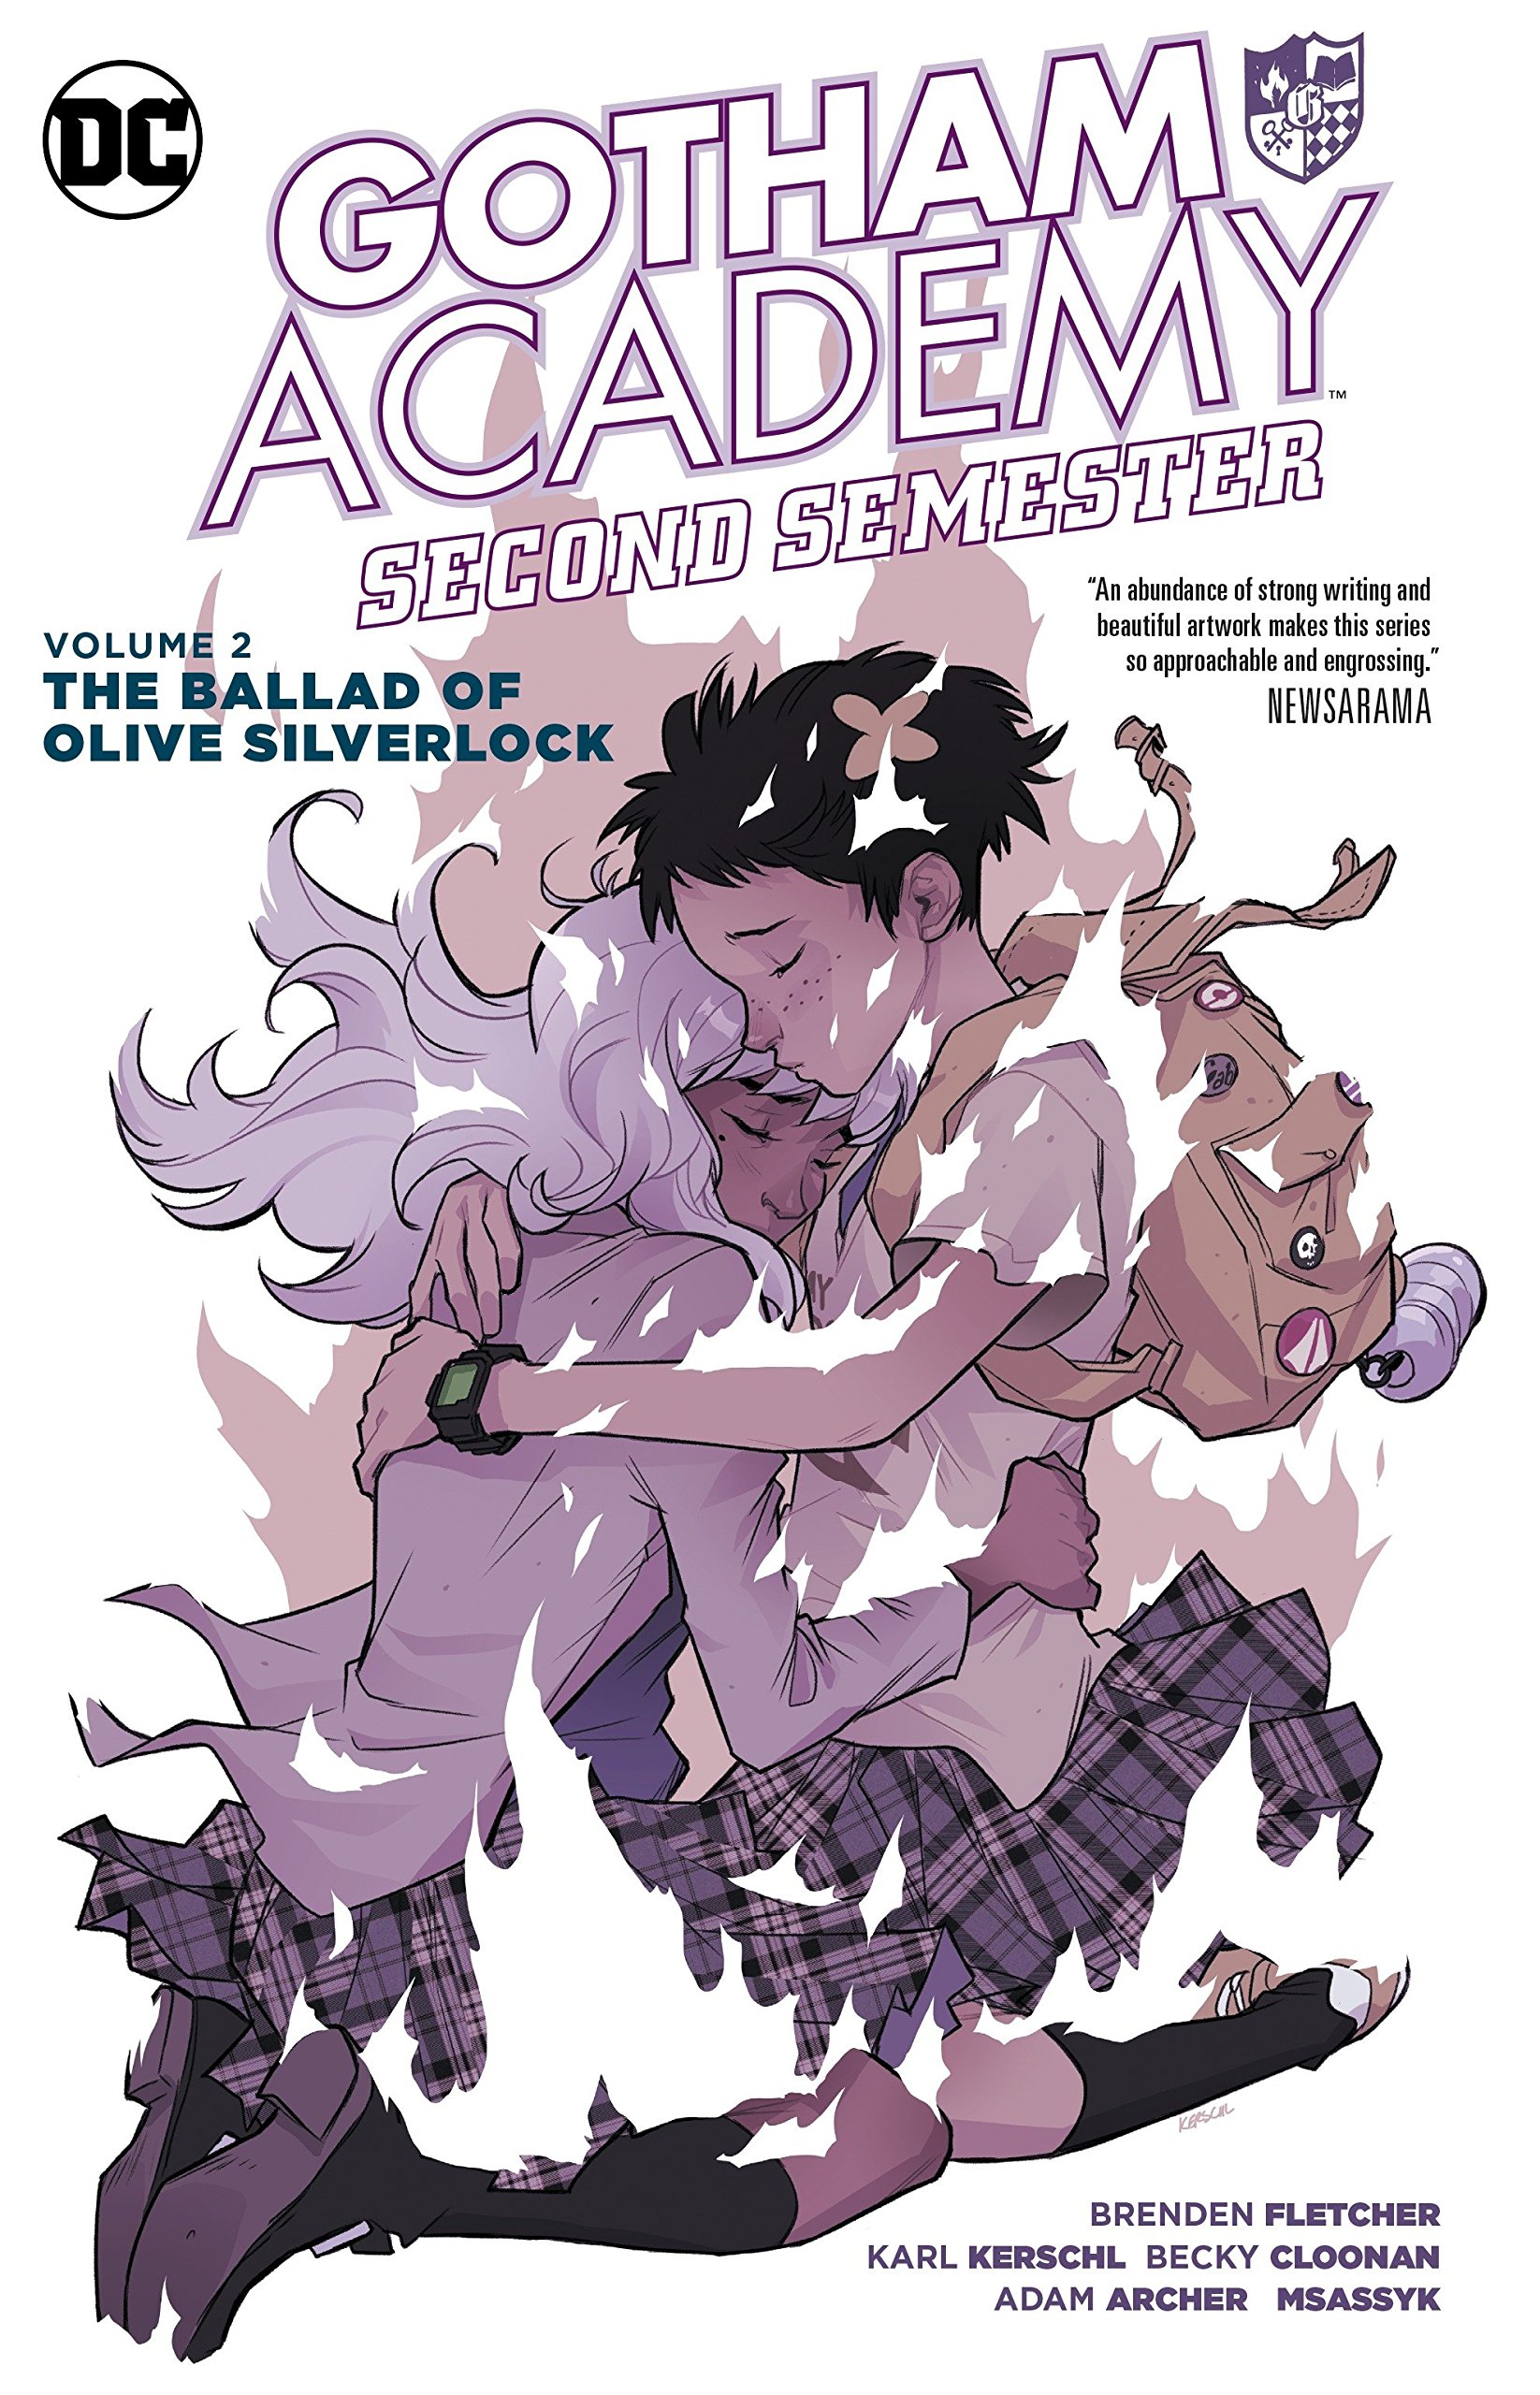 Gotham Academy Second Semester Graphic Novel Volume 2 Ballad of Olive